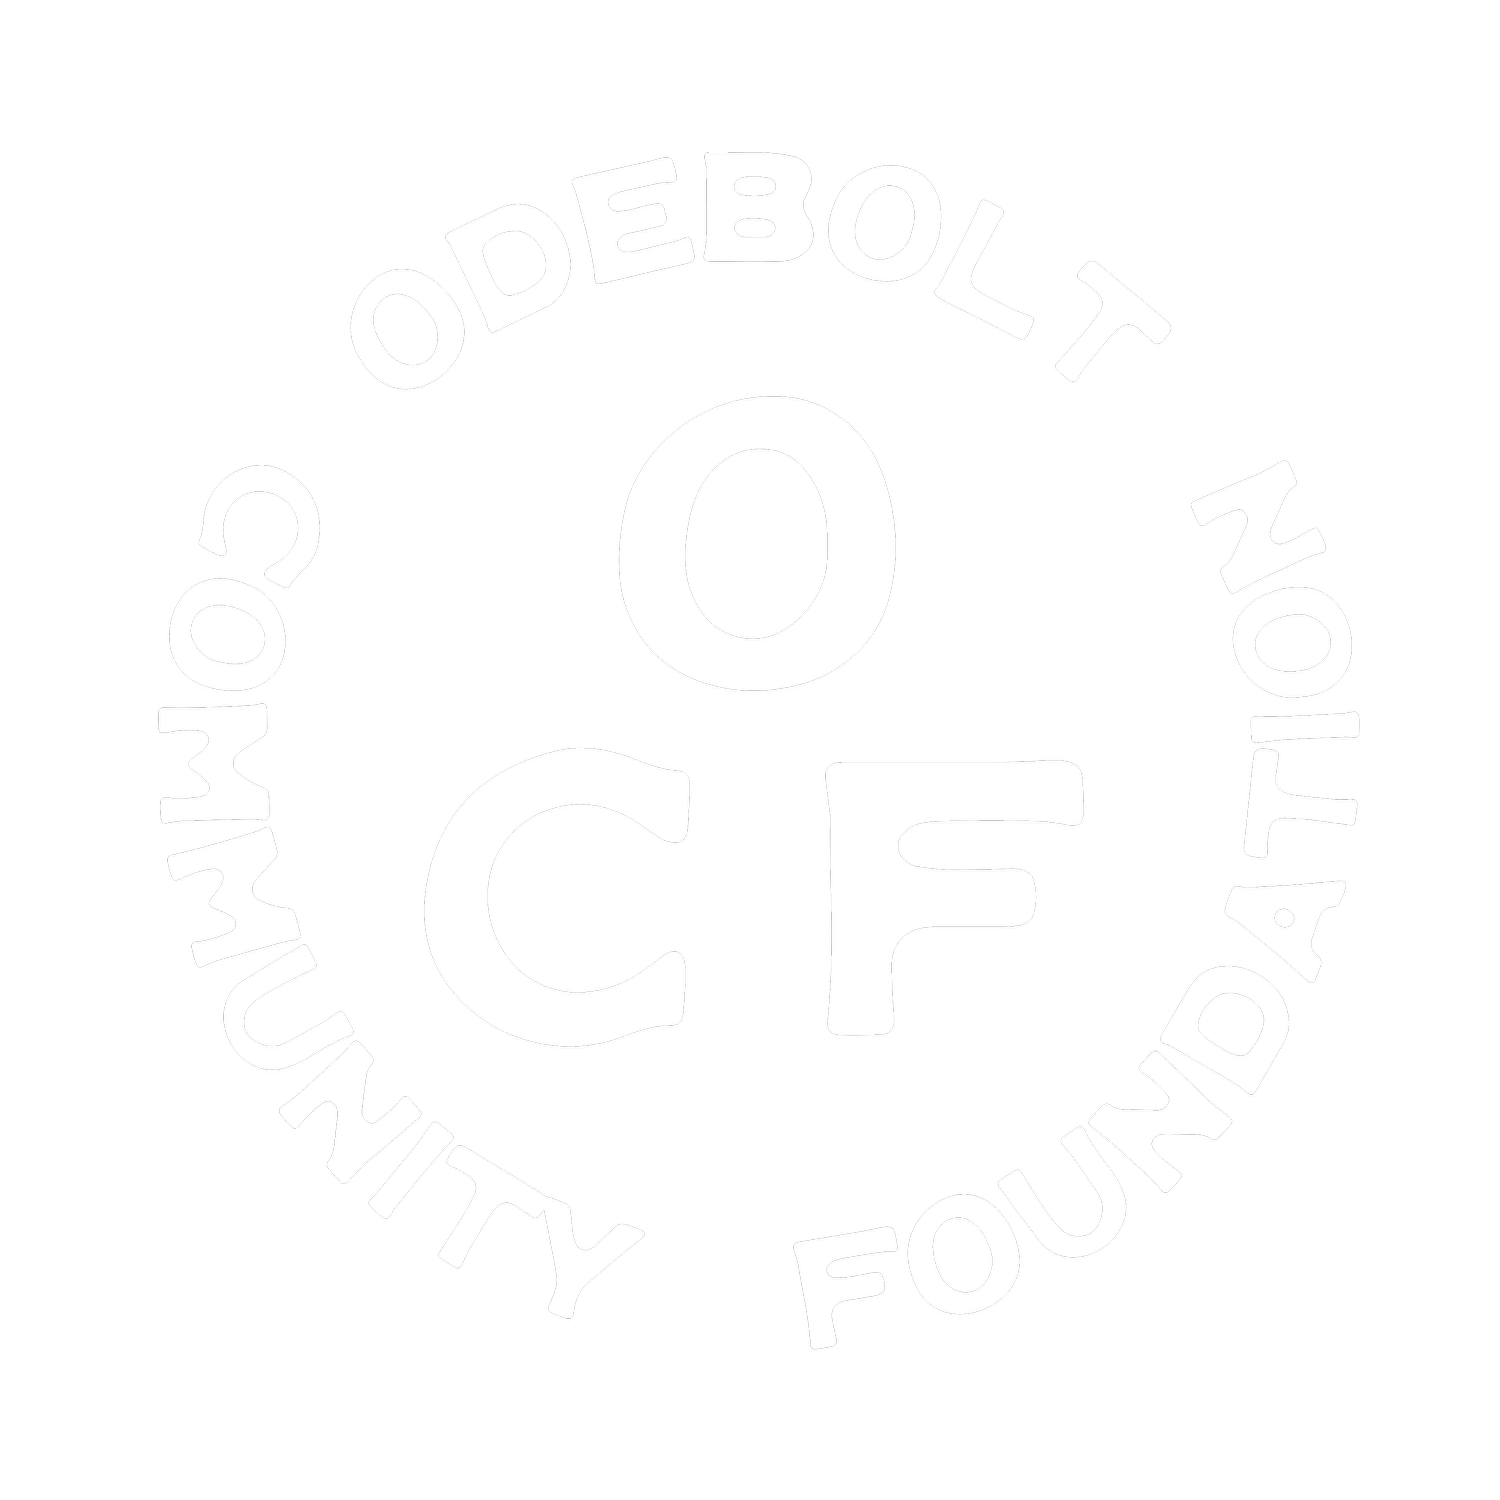 Odebolt Community Foundation